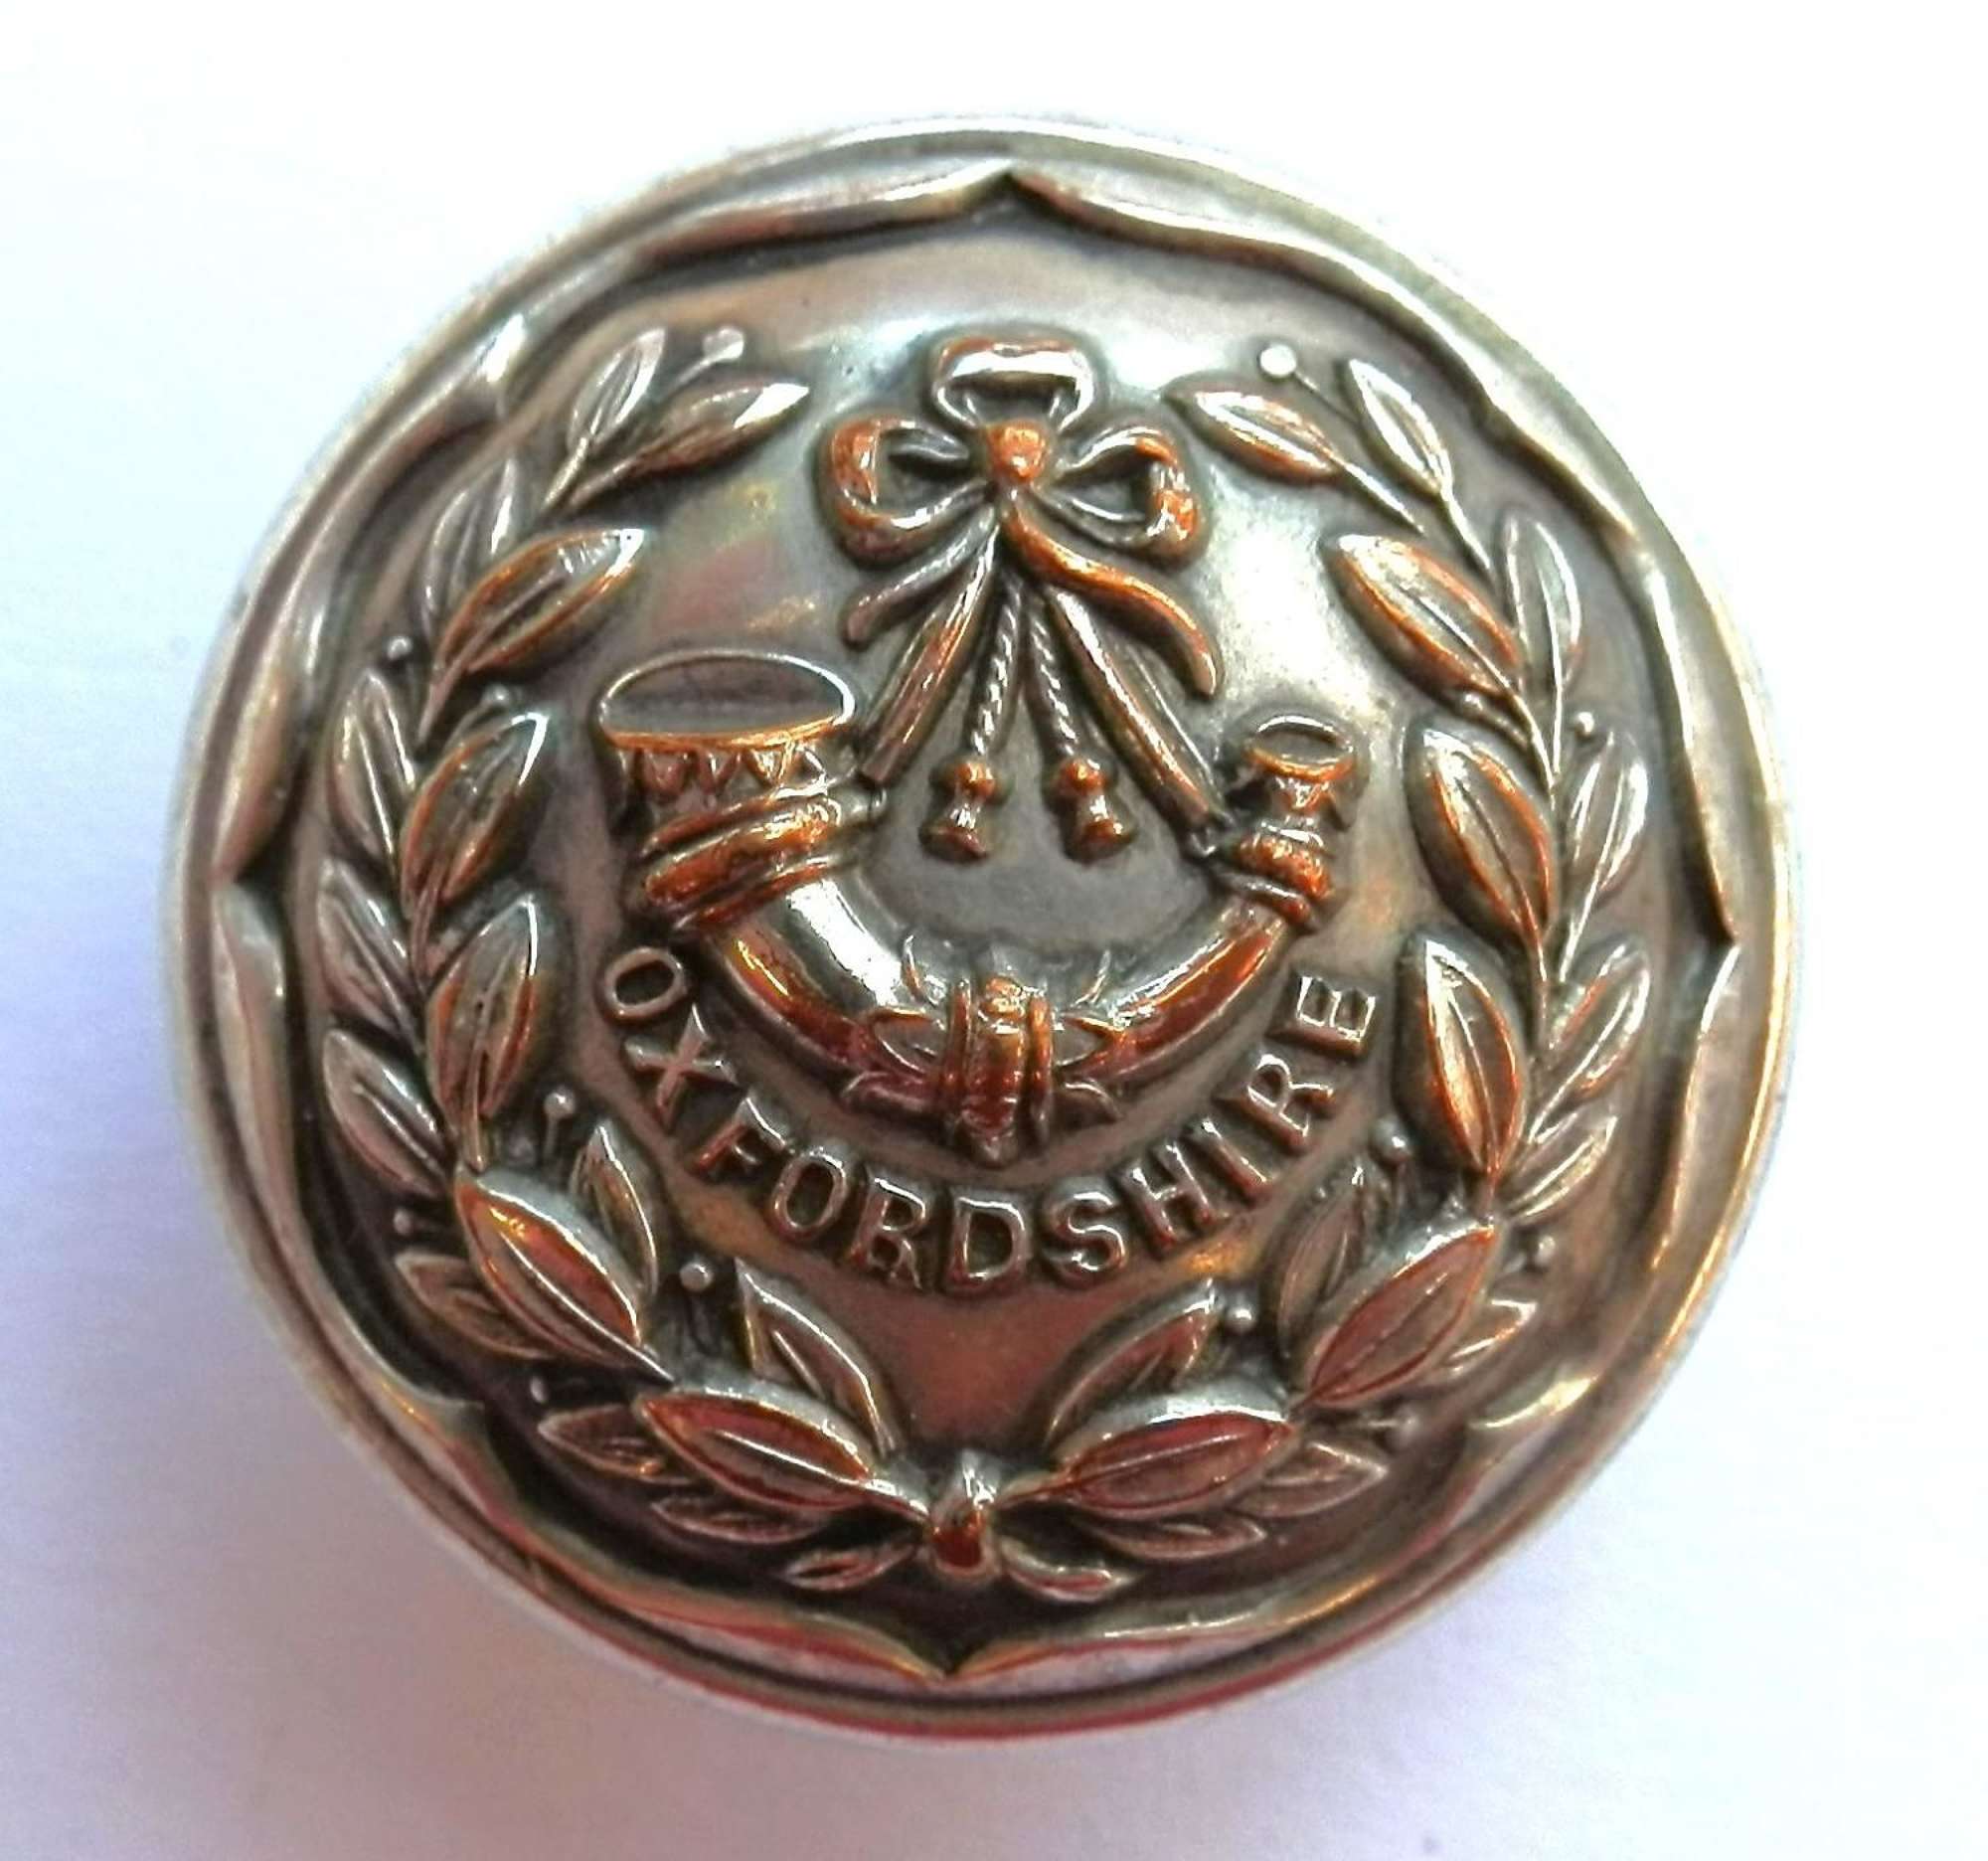 Oxfordshire Light Infantry Button